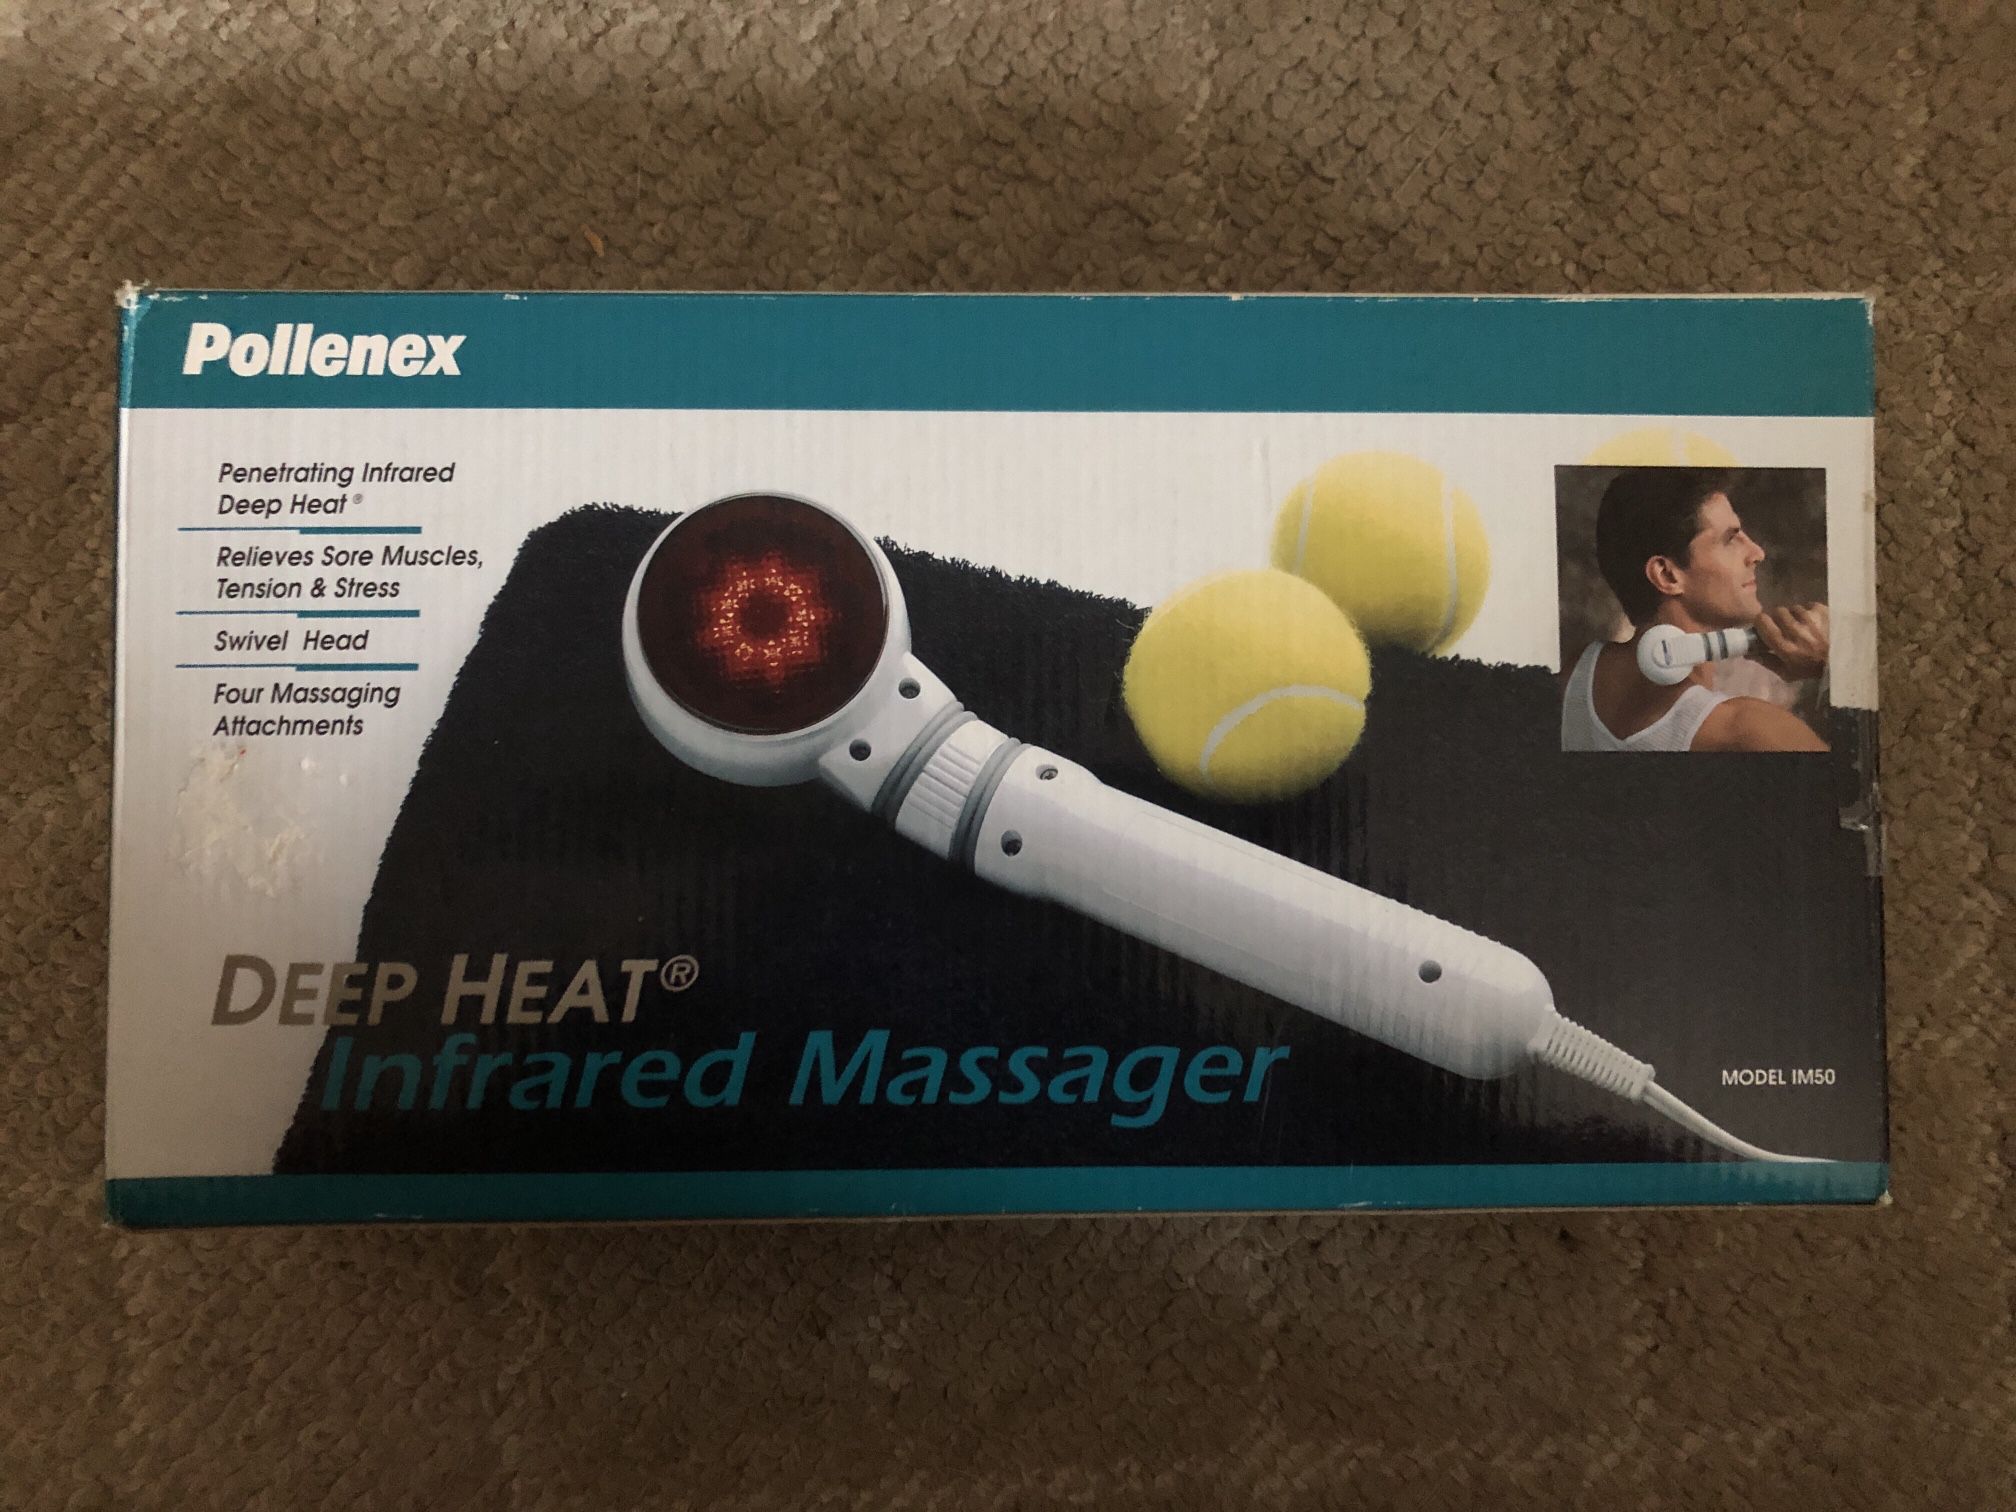 Pollenex Deep Heat Infrared Massager